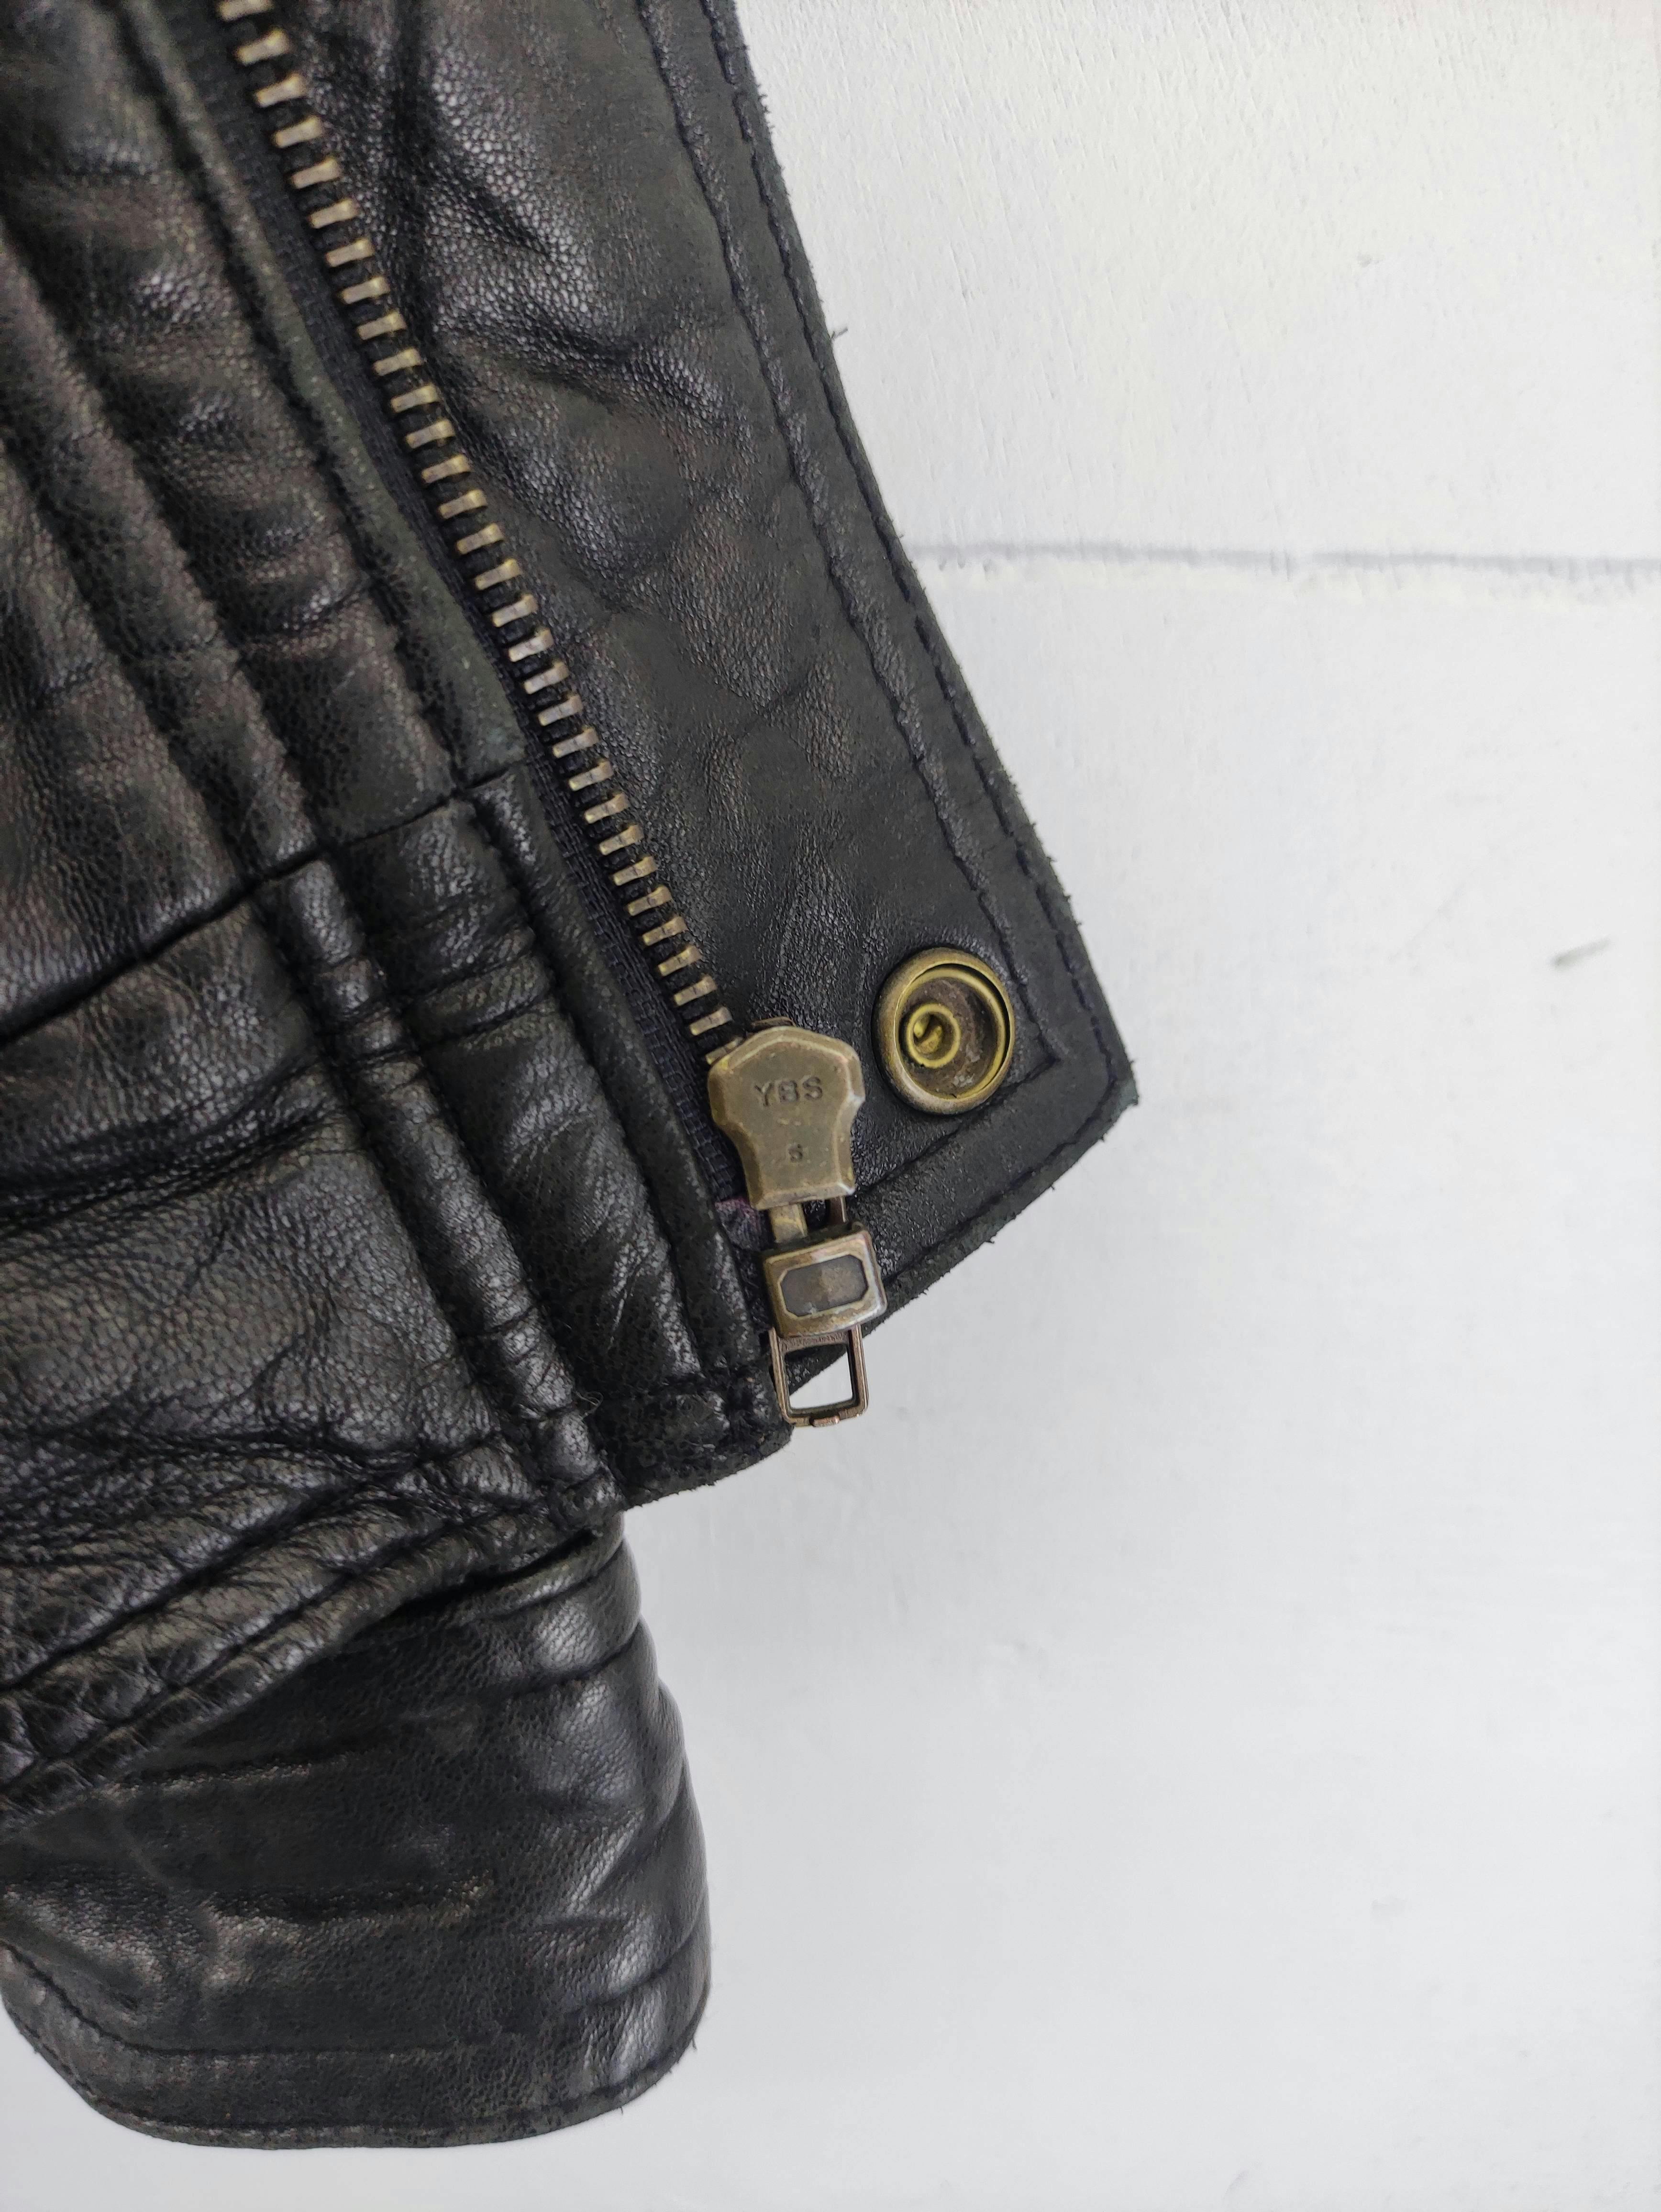 Vintage Ys Eachs Leather Jacket Zipper - 7